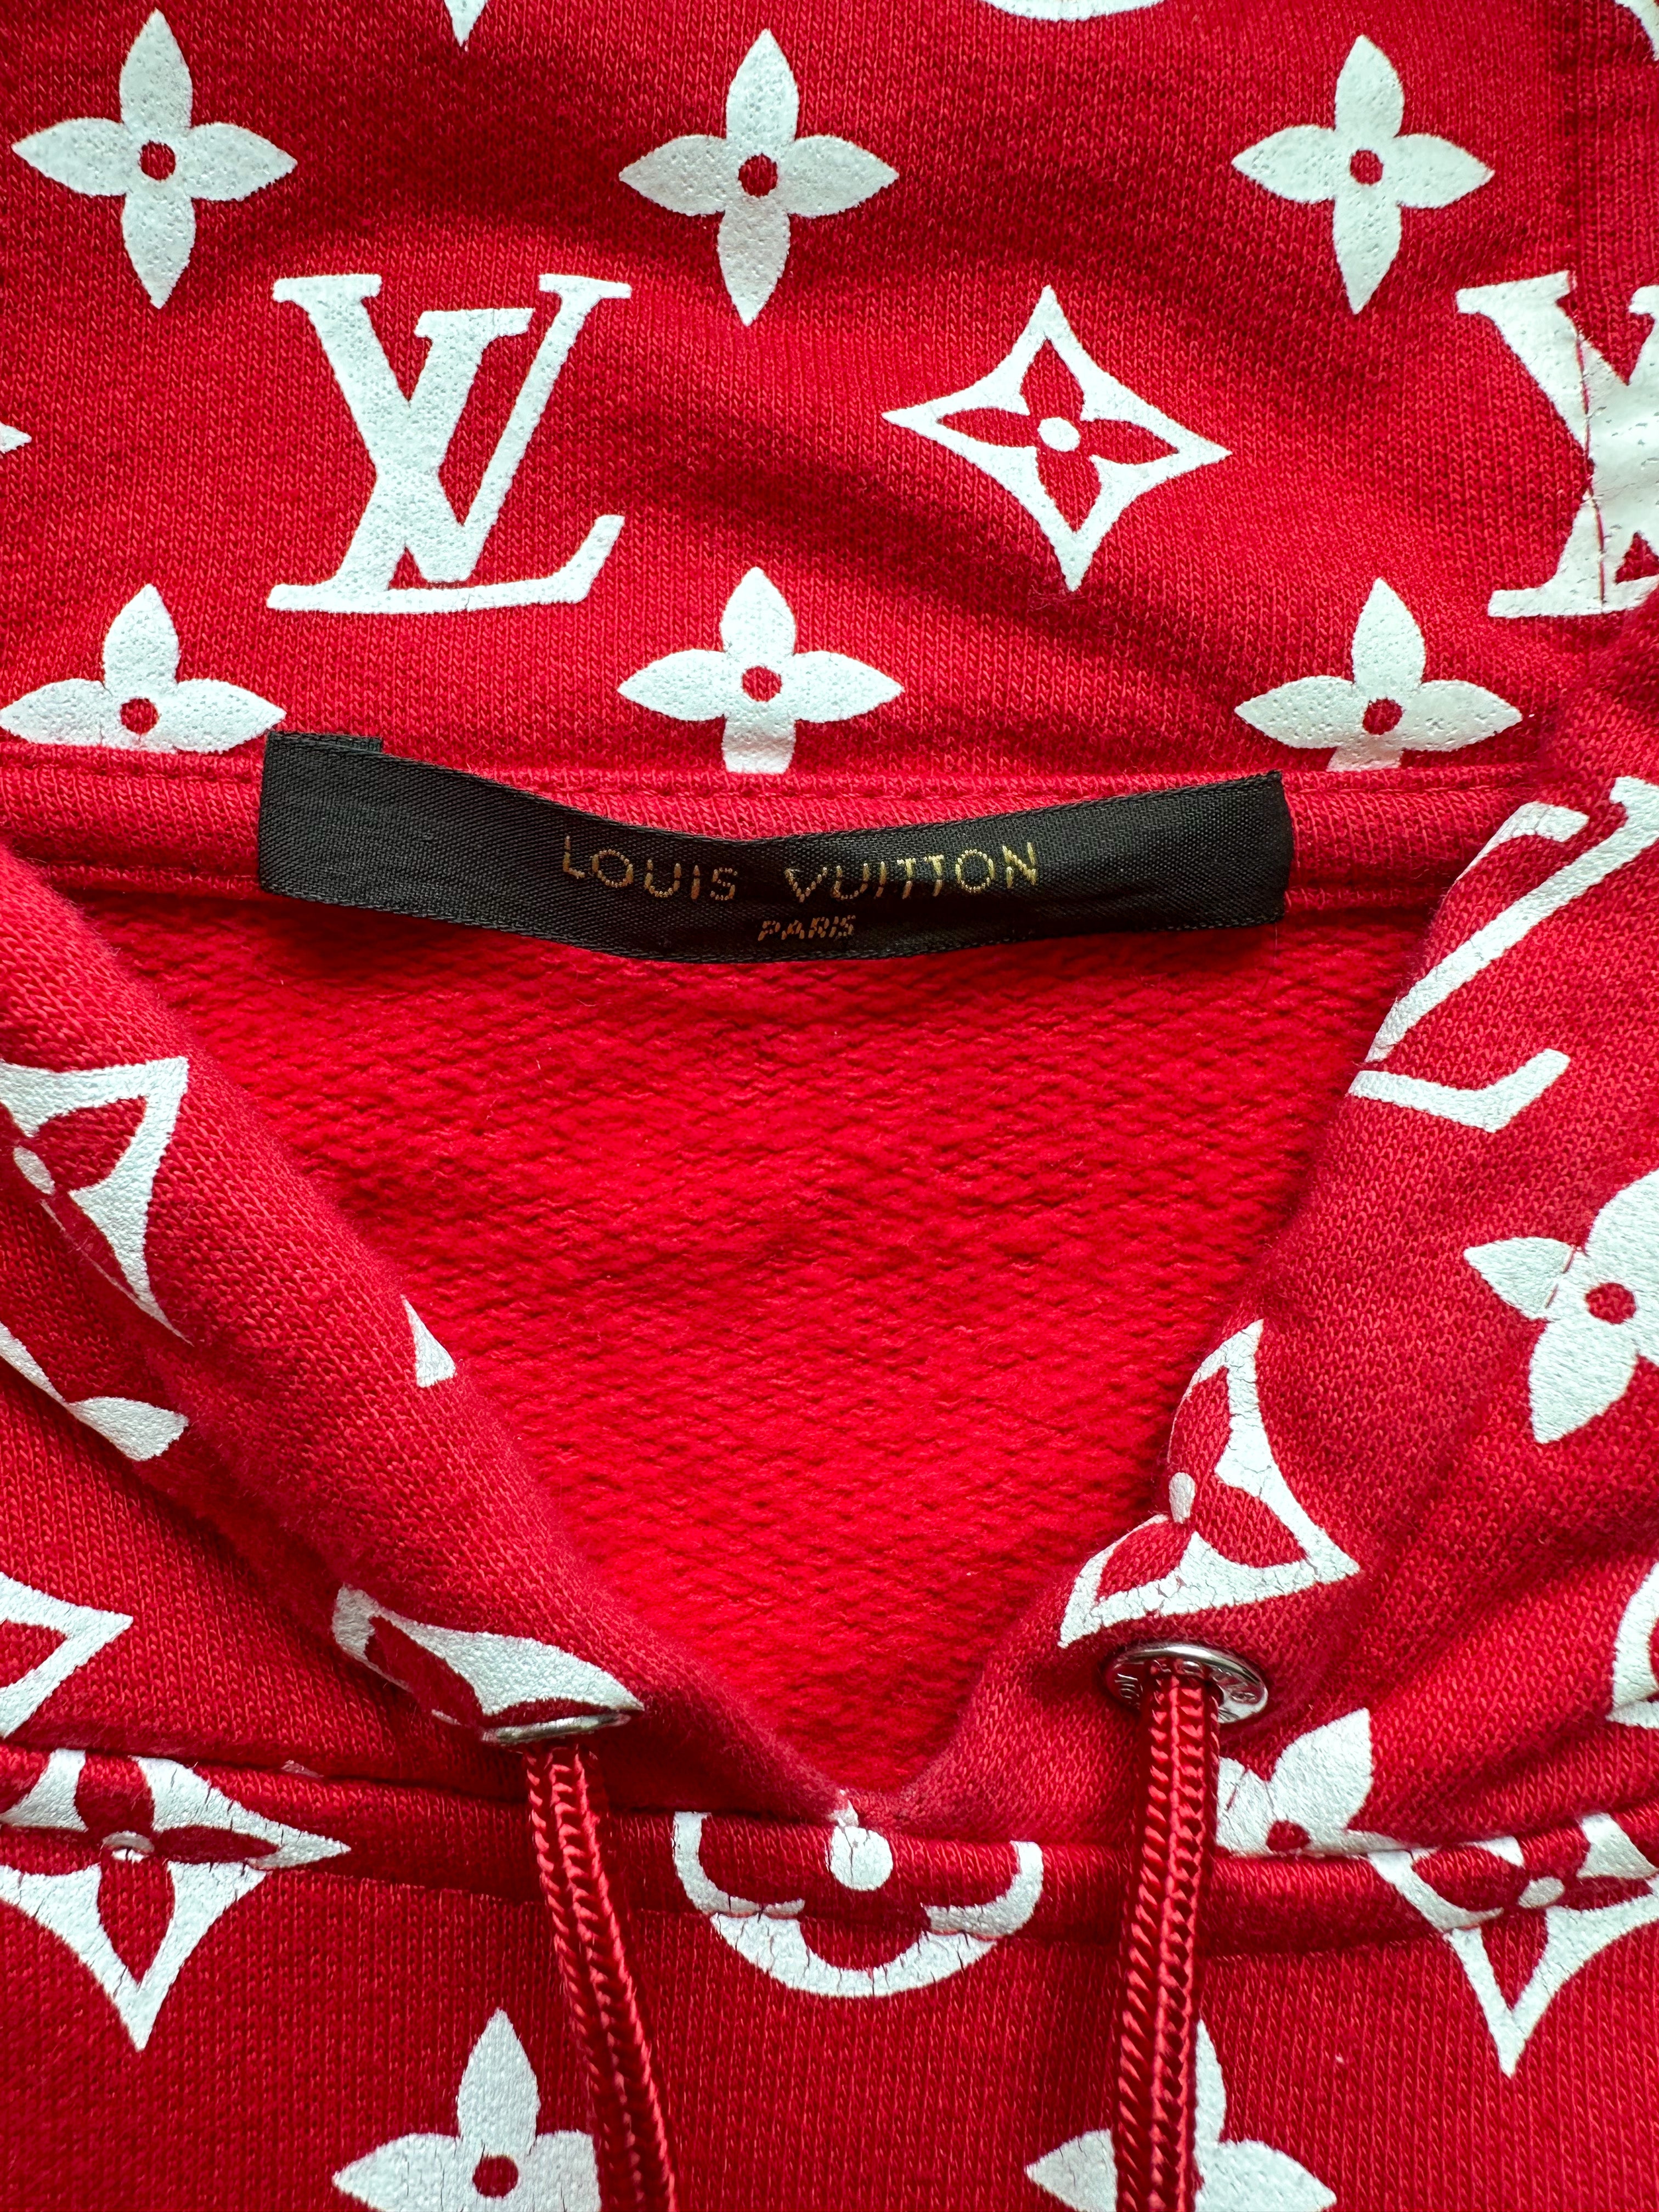 Louis Vuitton x Supreme 2017 Printed Hoodie  Red Sweatshirts  Hoodies  Clothing  LOUSU20895  The RealReal